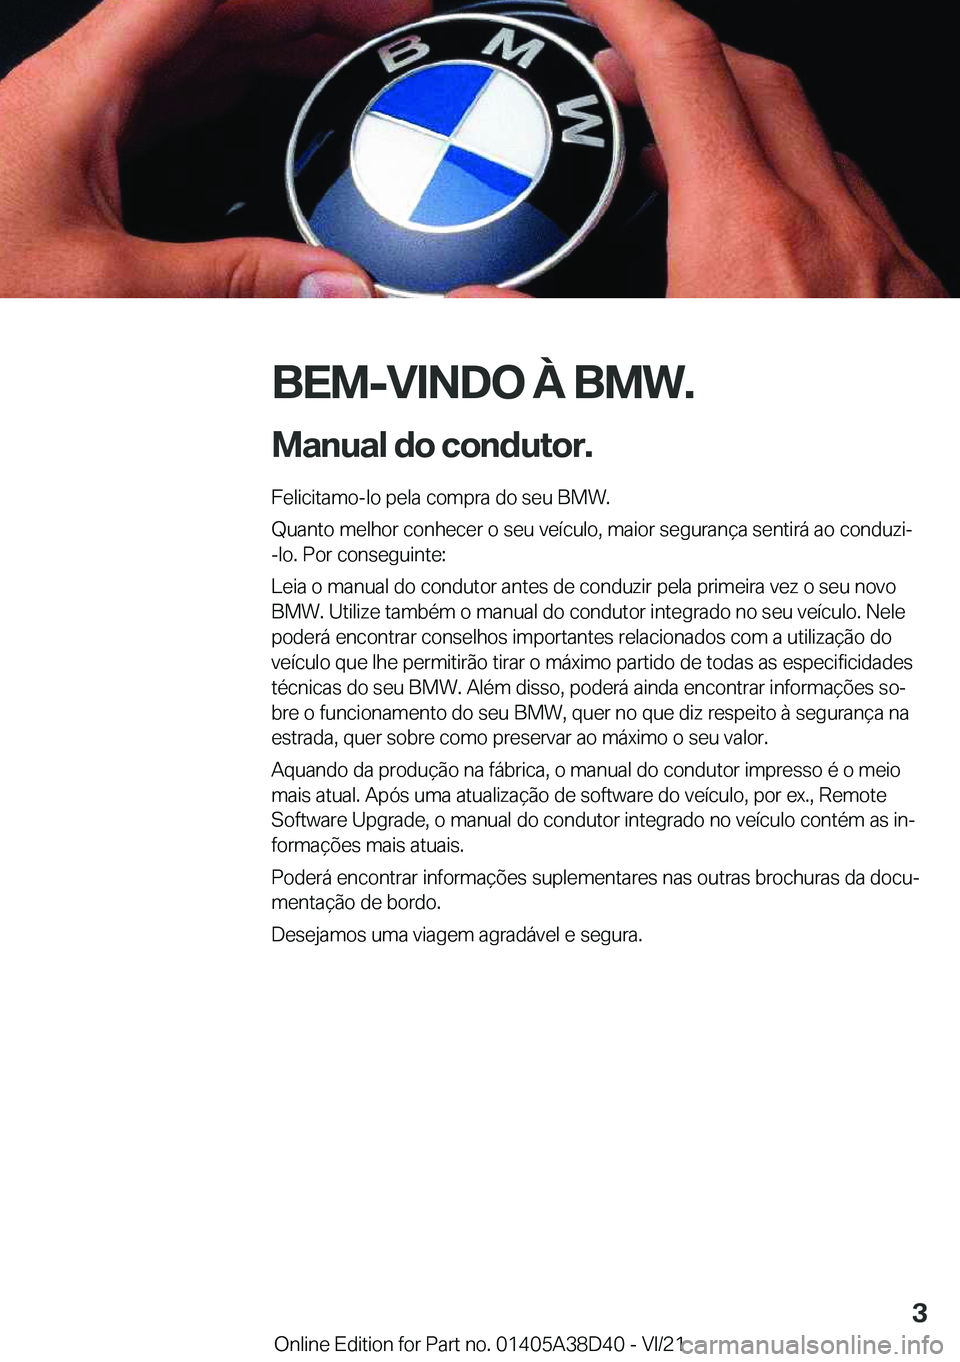 BMW 8 SERIES 2022  Manual do condutor (in Portuguese) �B�E�M�-�V�I�N�D�O��À��B�M�W�.
�M�a�n�u�a�l��d�o��c�o�n�d�u�t�o�r�. �F�e�l�i�c�i�t�a�m�o�-�l�o��p�e�l�a��c�o�m�p�r�a��d�o��s�e�u��B�M�W�.
�Q�u�a�n�t�o��m�e�l�h�o�r��c�o�n�h�e�c�e�r��o��s